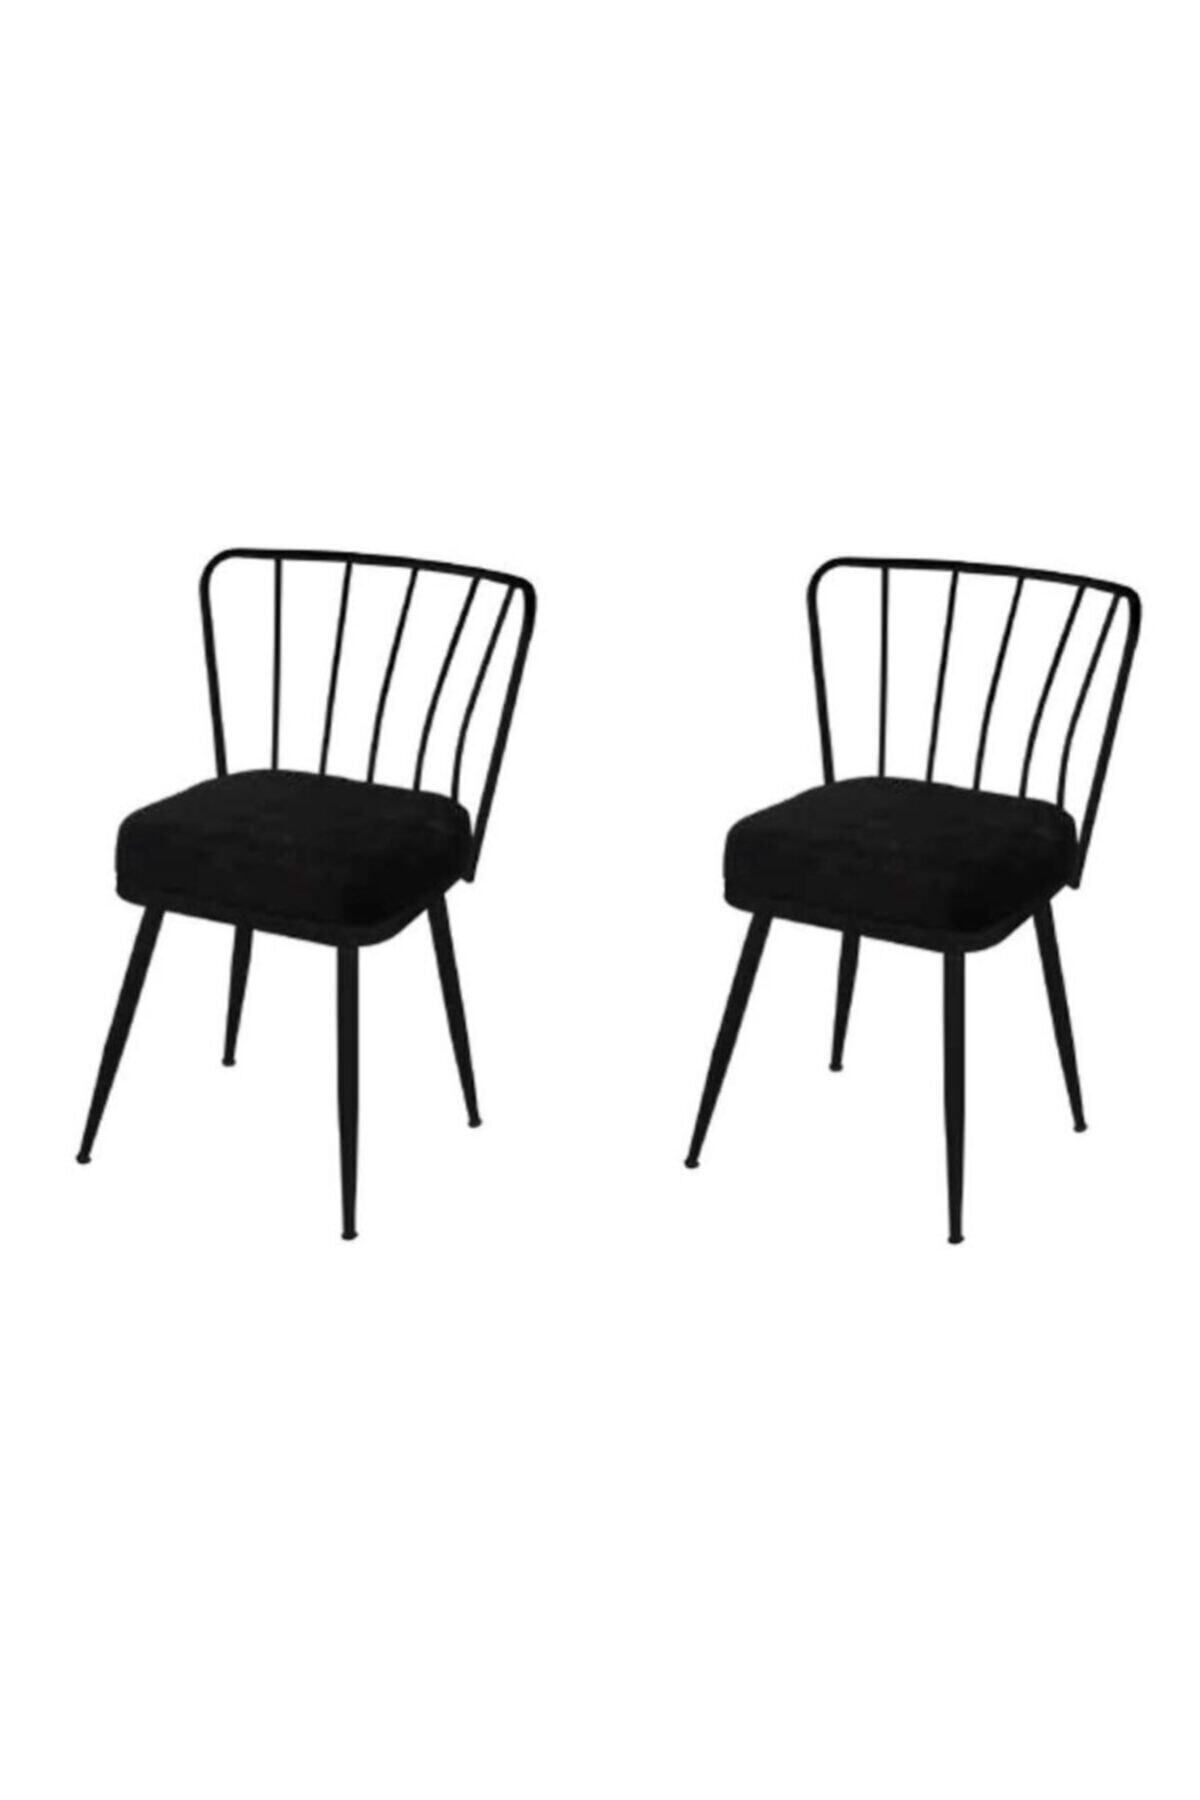 Sandalye Shop Ay Sandalye 2li Siyahgörsel Sandalyeshopa Ait Grandhome’a Değil.satıcı Seçimine Dikkat